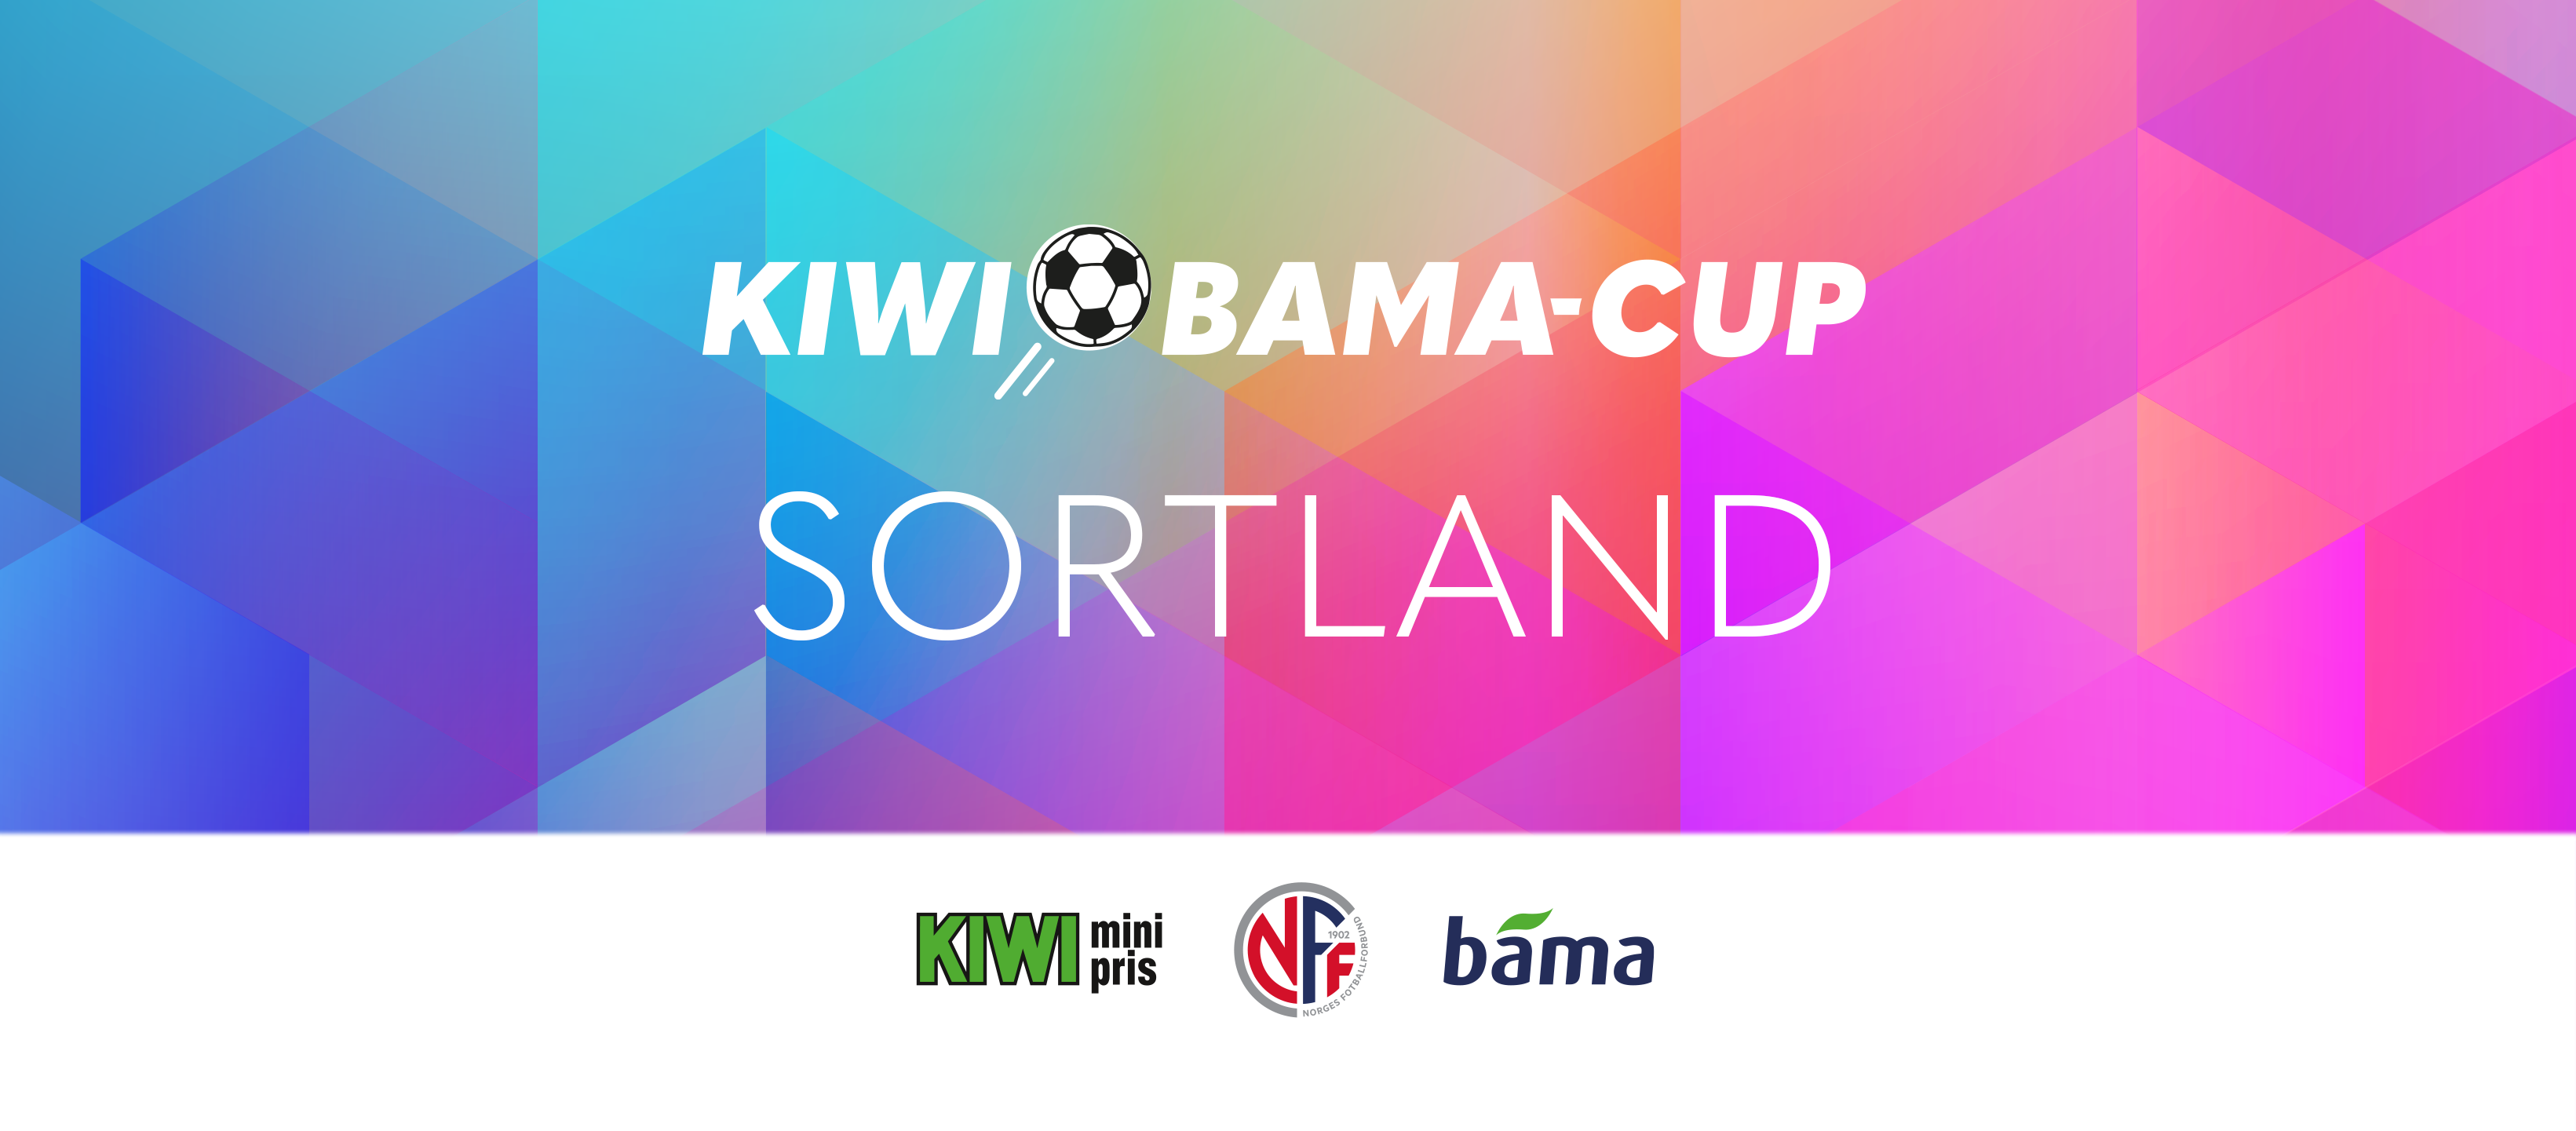 FB-BANNER KIWI-BAMA-Cup - Sortland.png